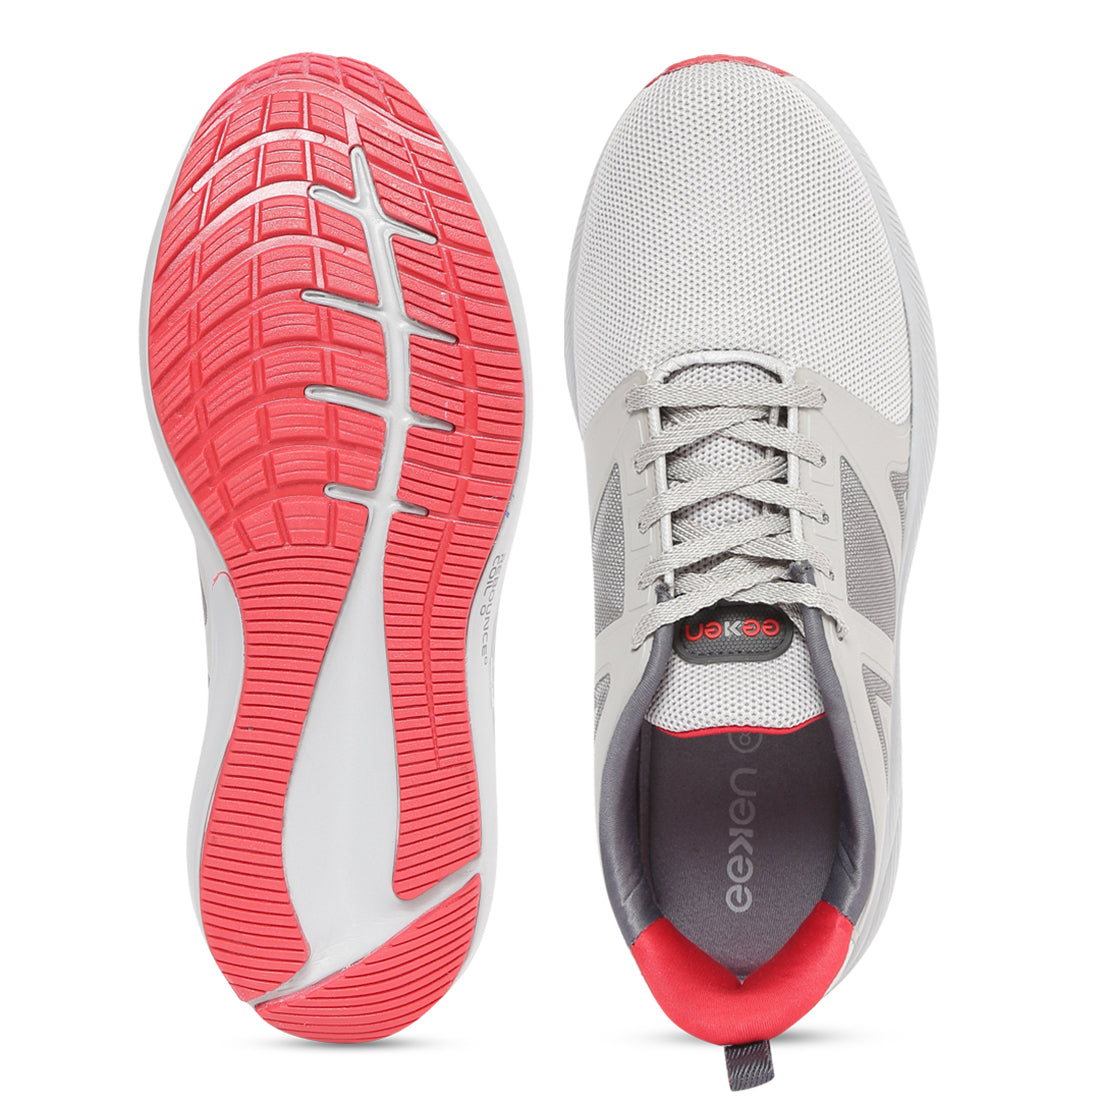 Eeken Light Grey - Red Athleisure Shoes for Men